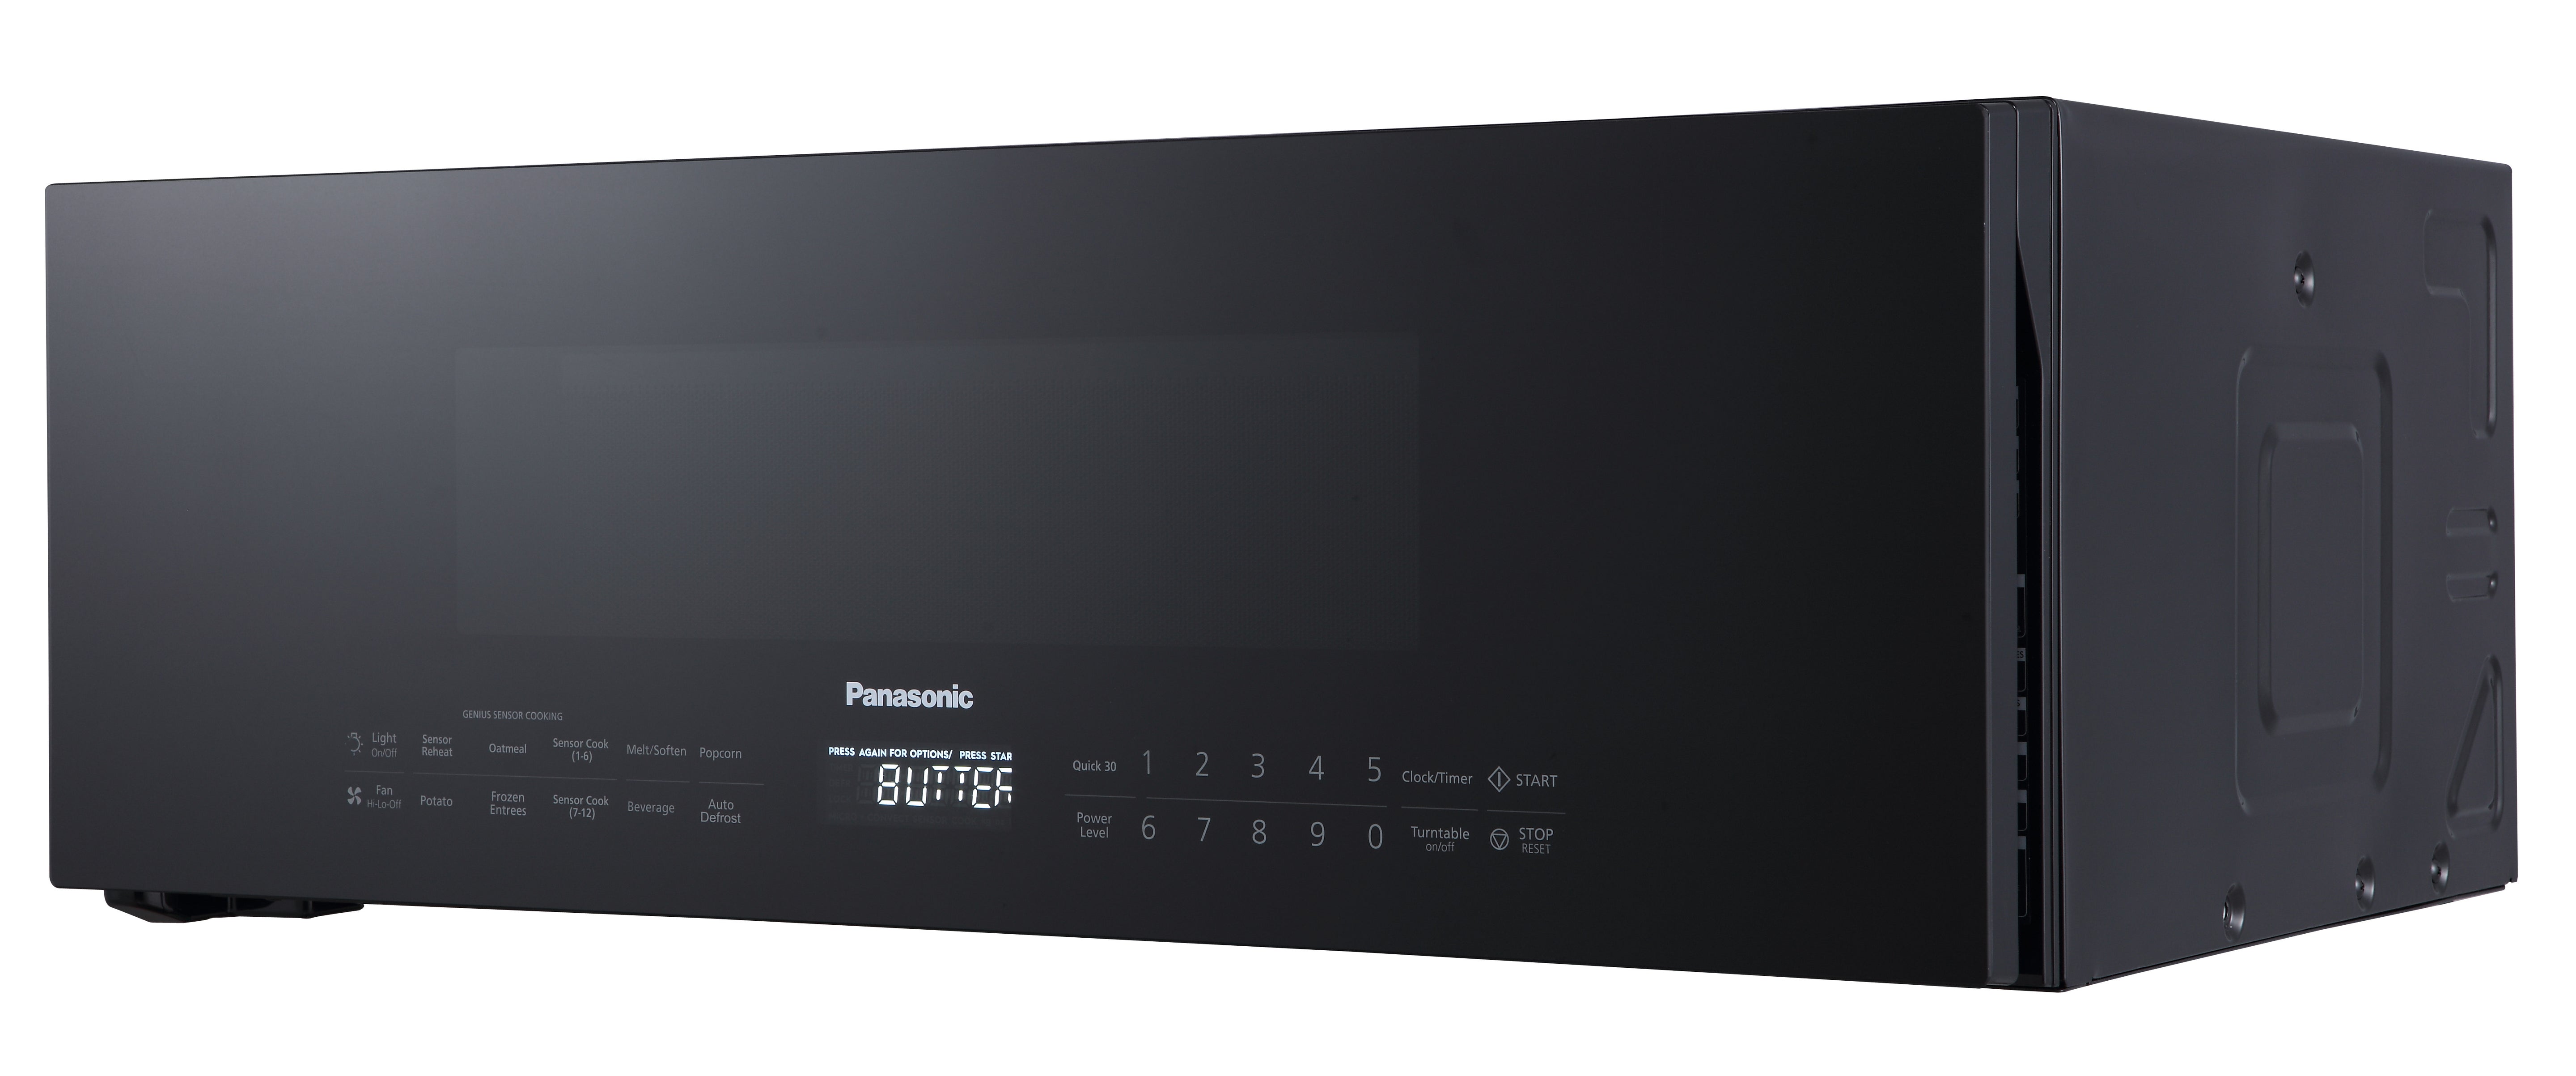 Panasonic - 1.2 cu. Ft  Over the range Microwave in Black - NNSG65NB